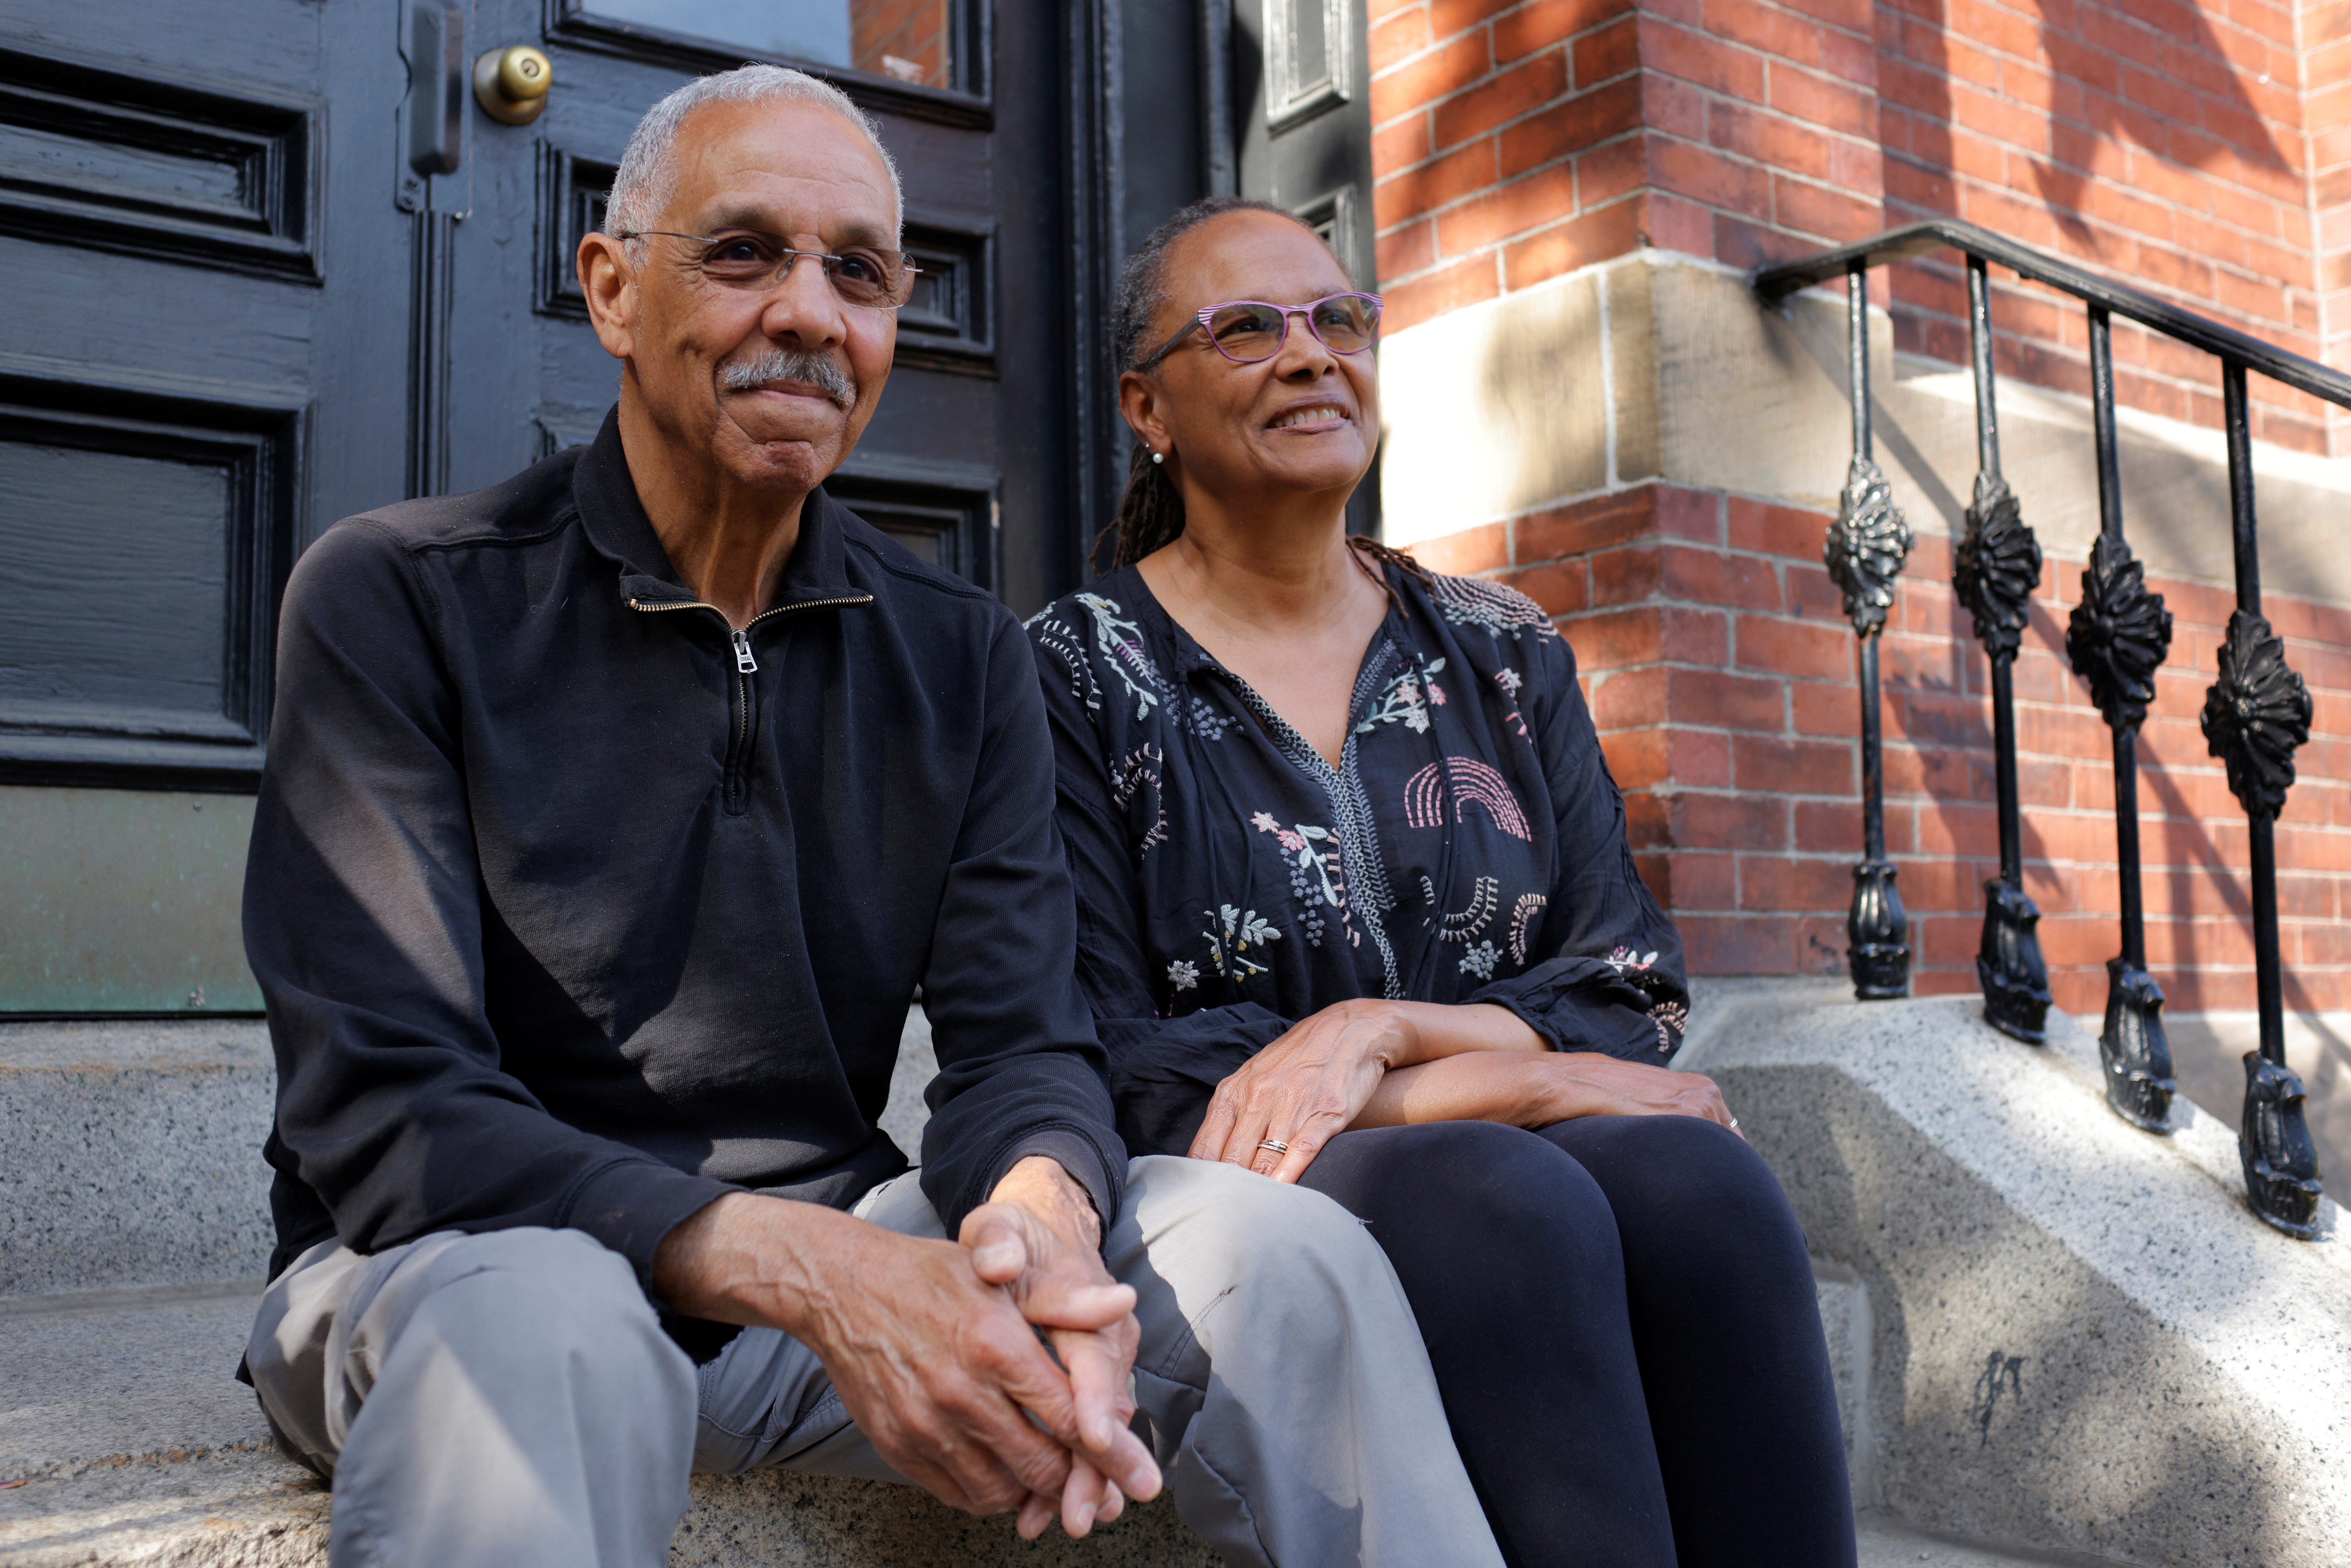 Robert and Bettye Freeman pose for a portrait in Boston